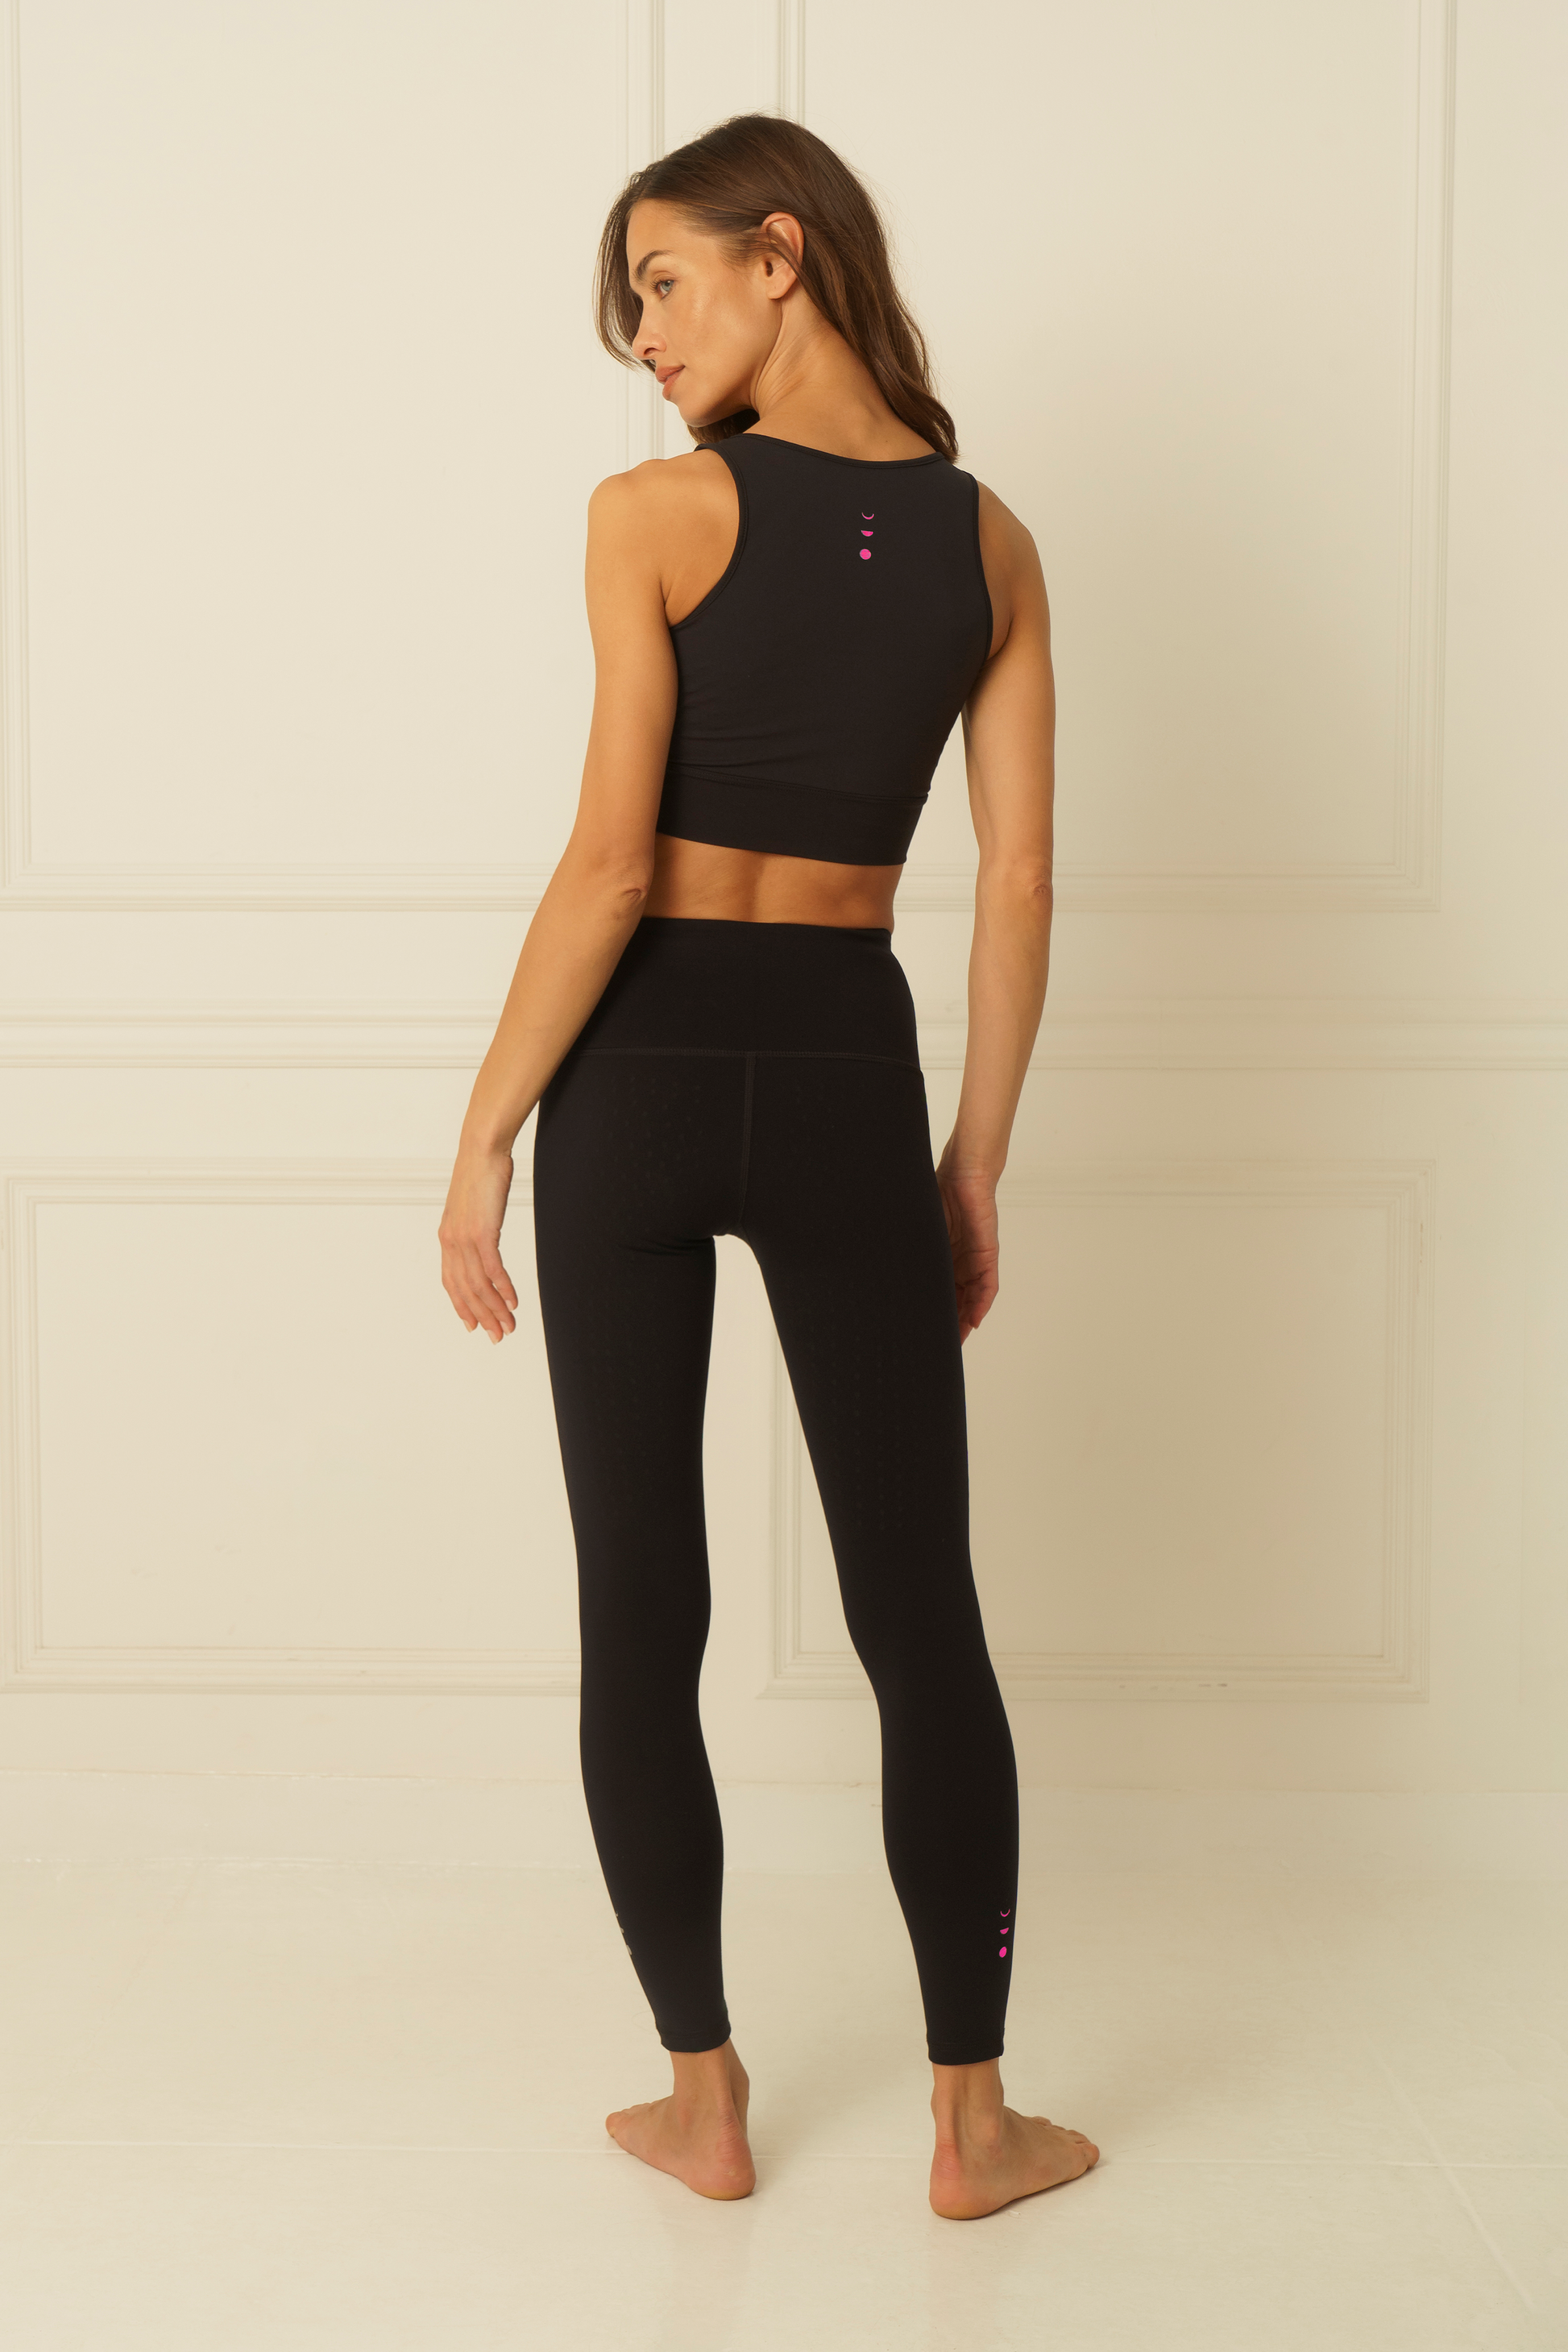 Shop All - Elastique Athletics  Compression leggings women